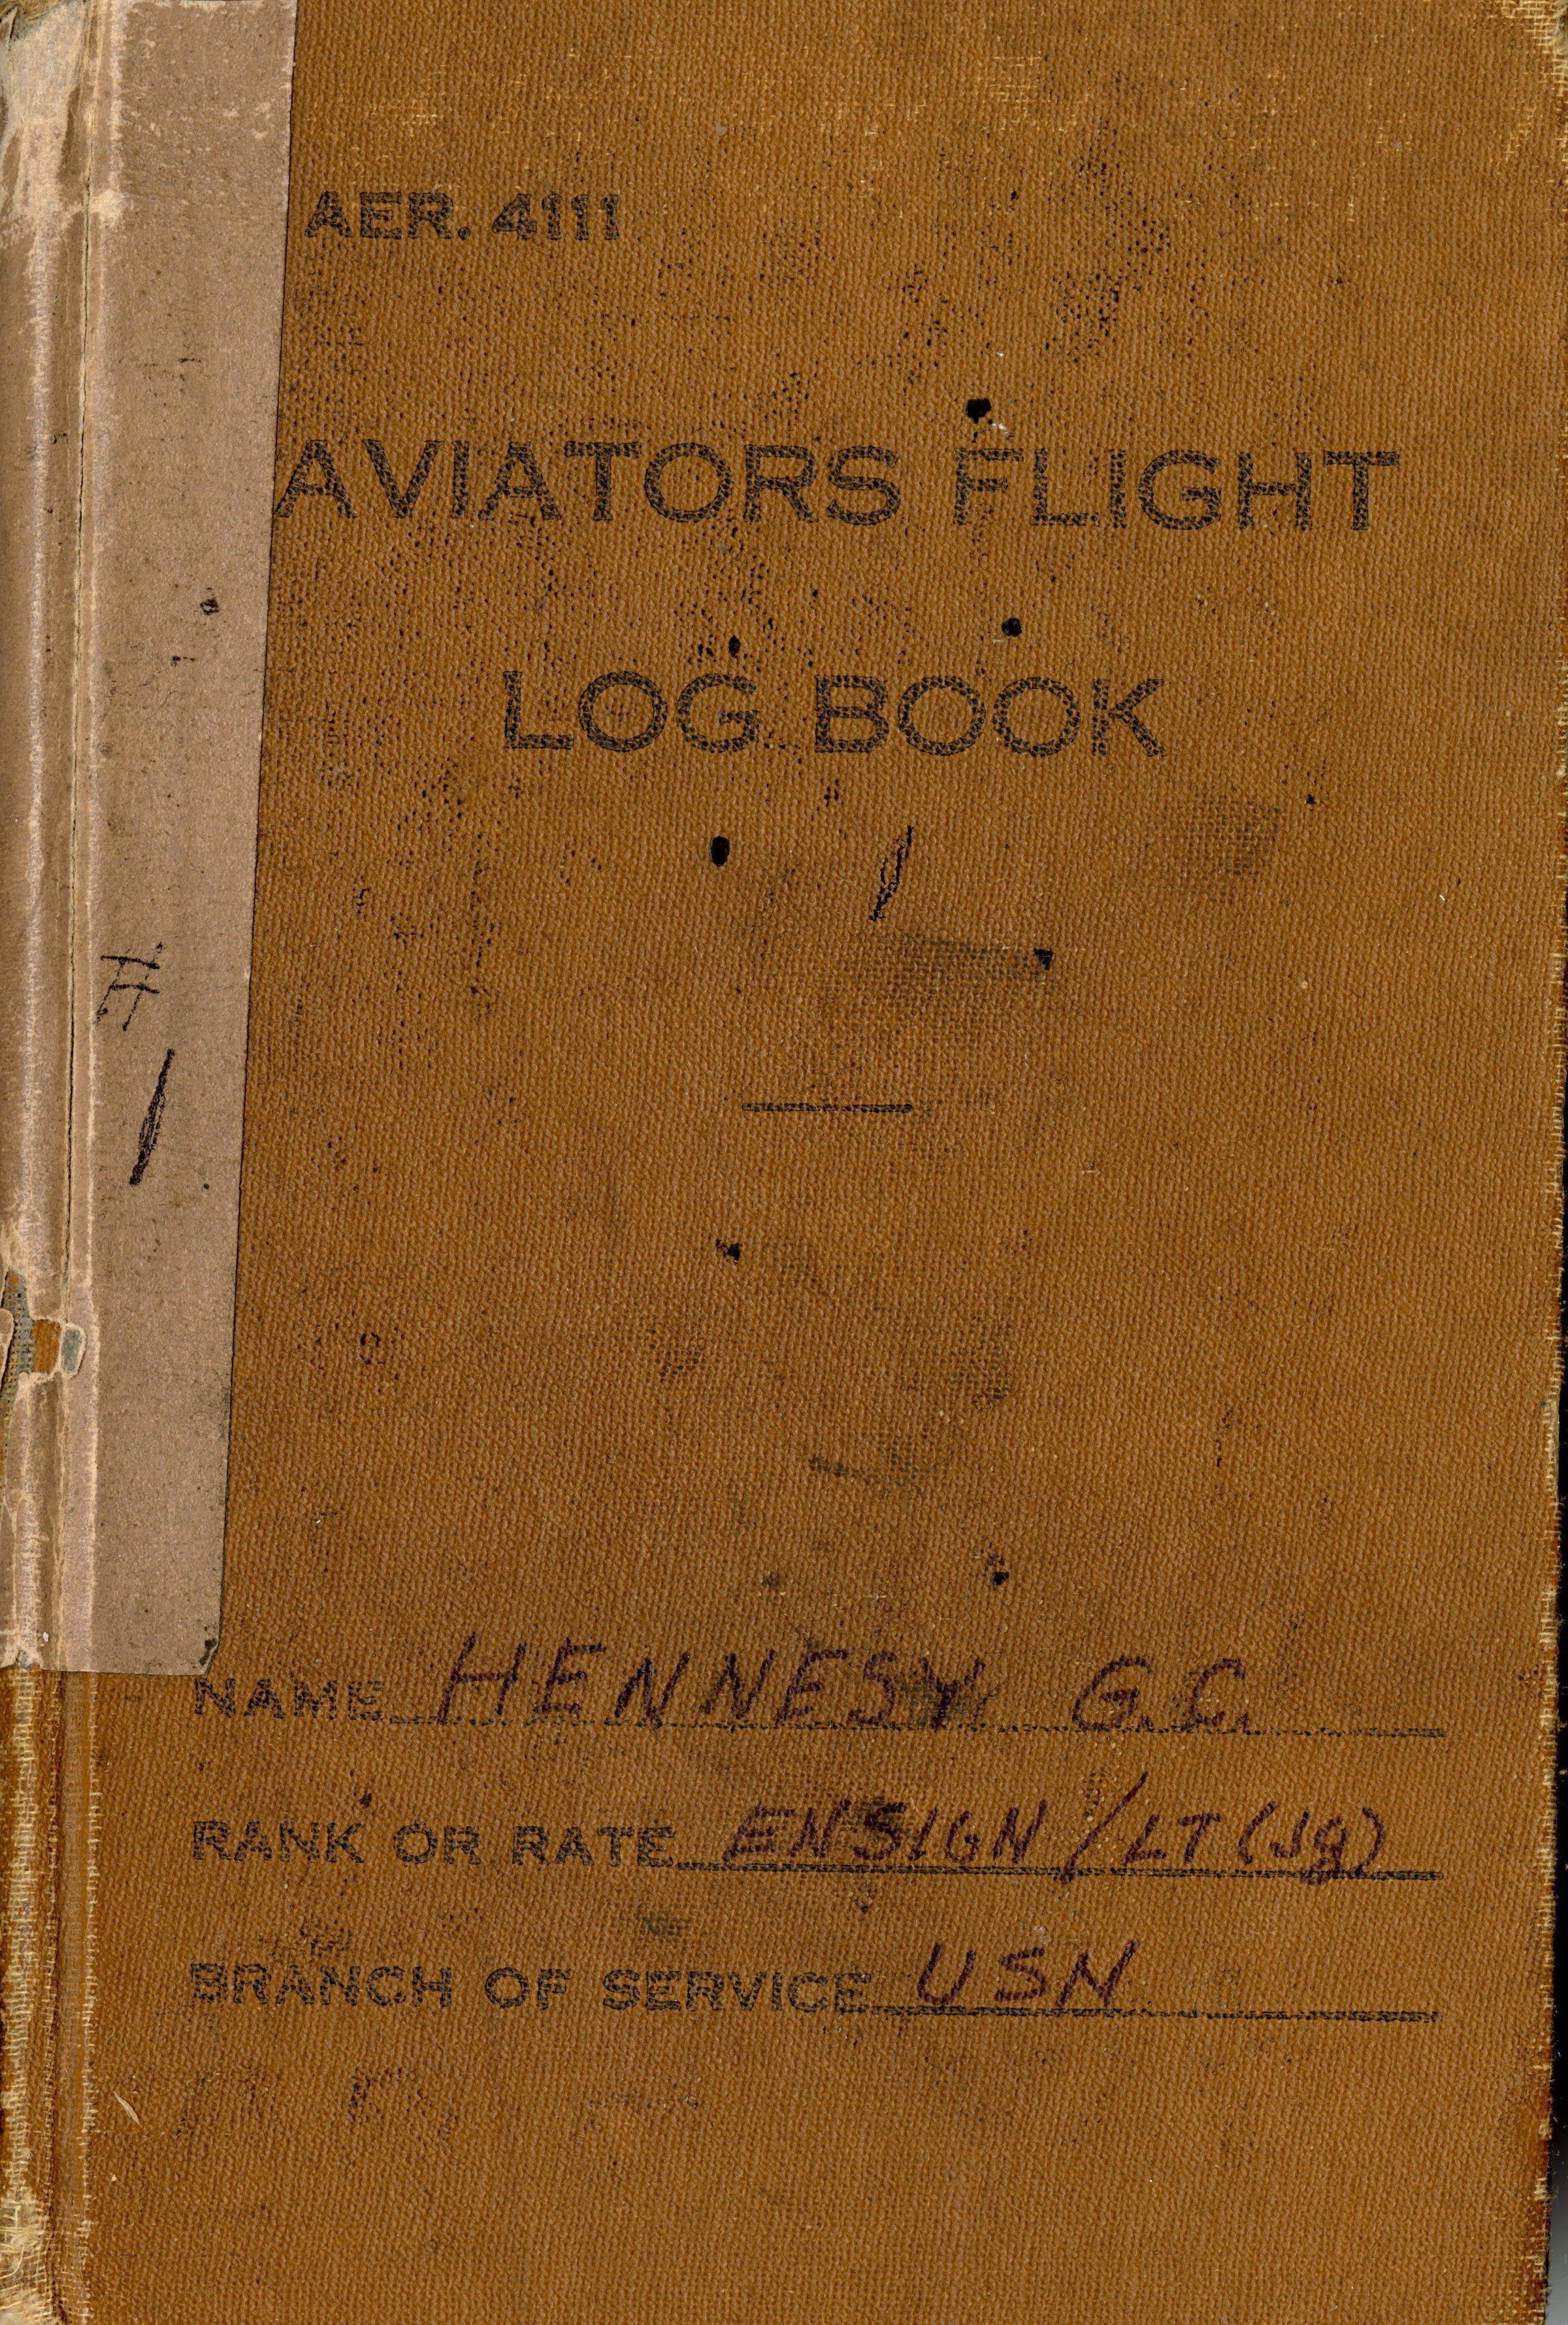 Primary Image of Aviators Flight Log Book of Gerald Hennesy (1942-1944)